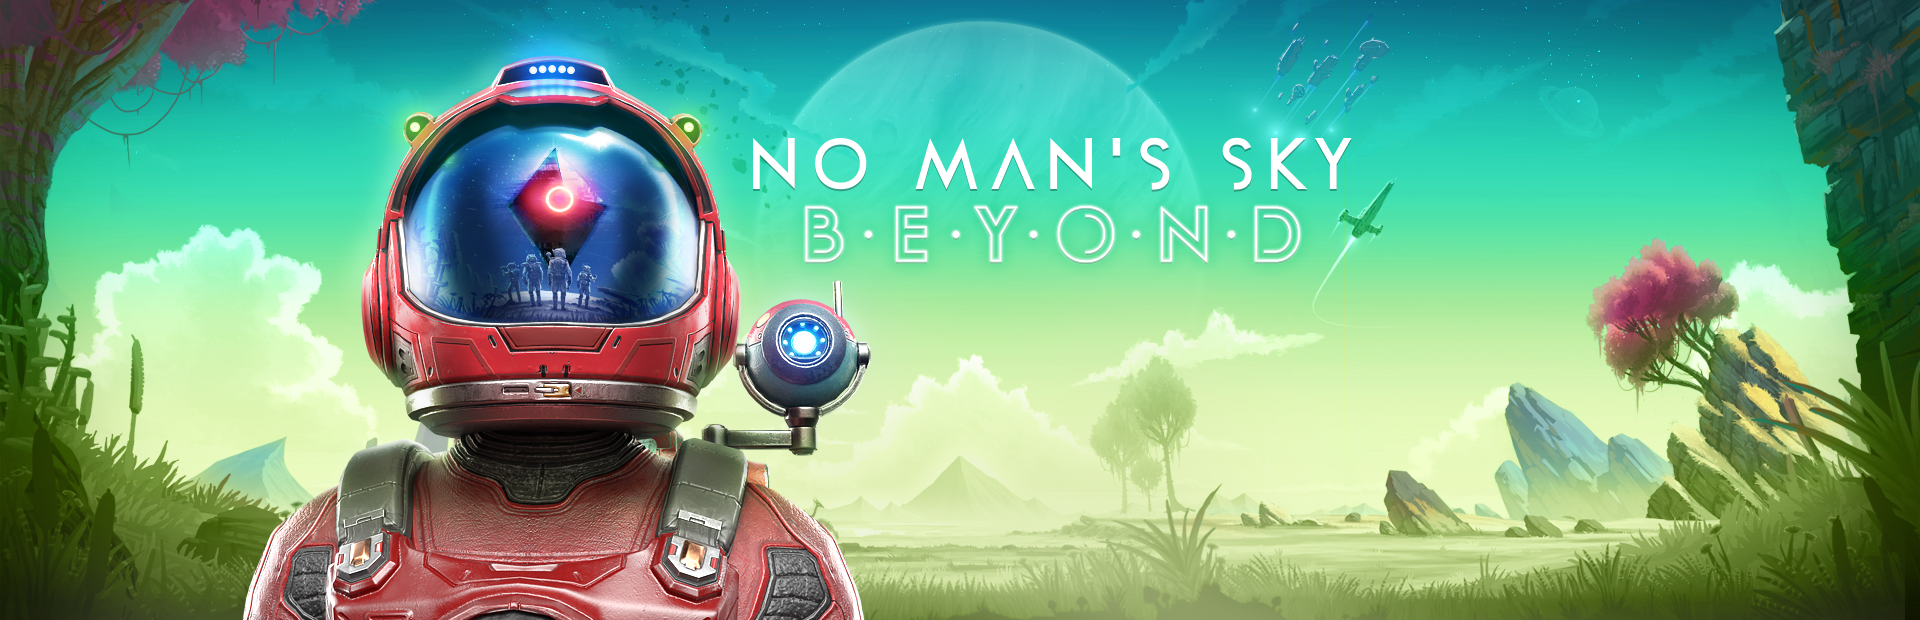 No Man's Sky BEYOND (v2.0) Update   